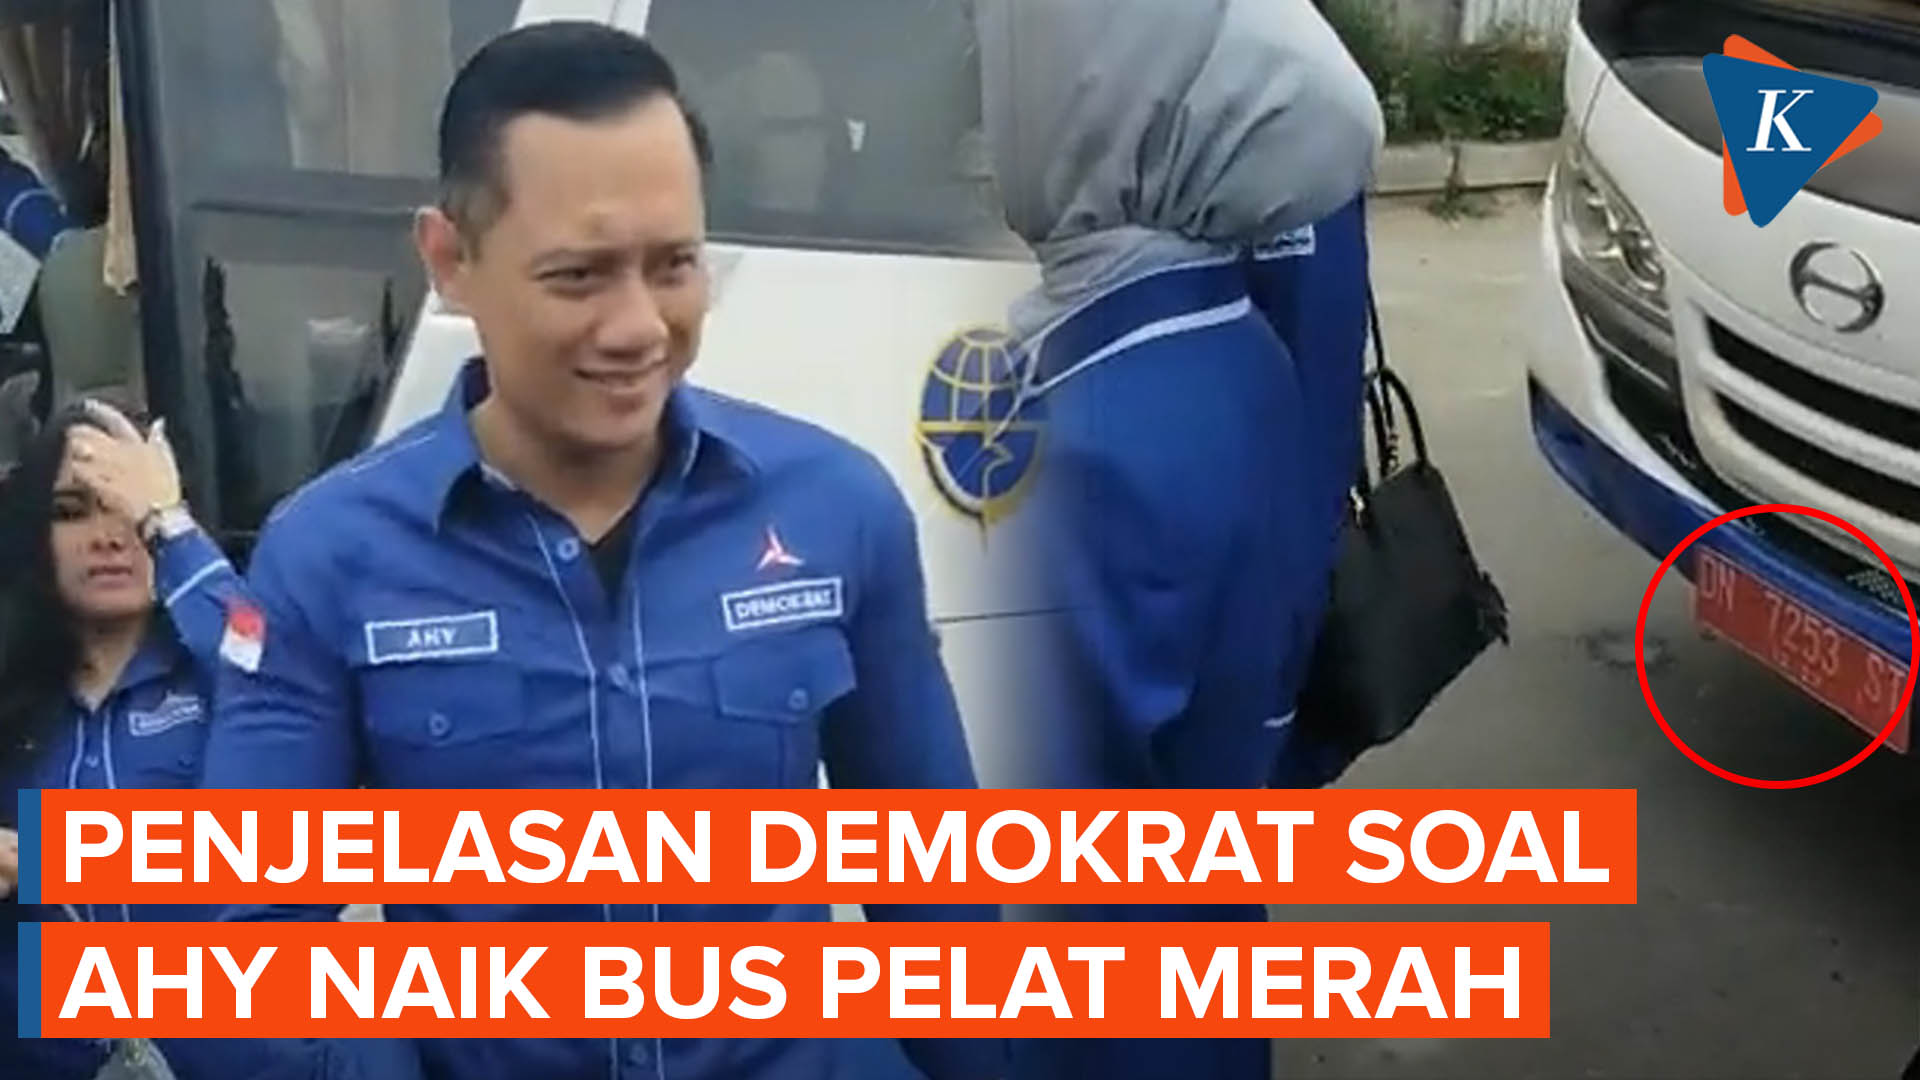 Viral Video AHY Naik Bus Pelat Merah, Demokrat Beri Penjelasan